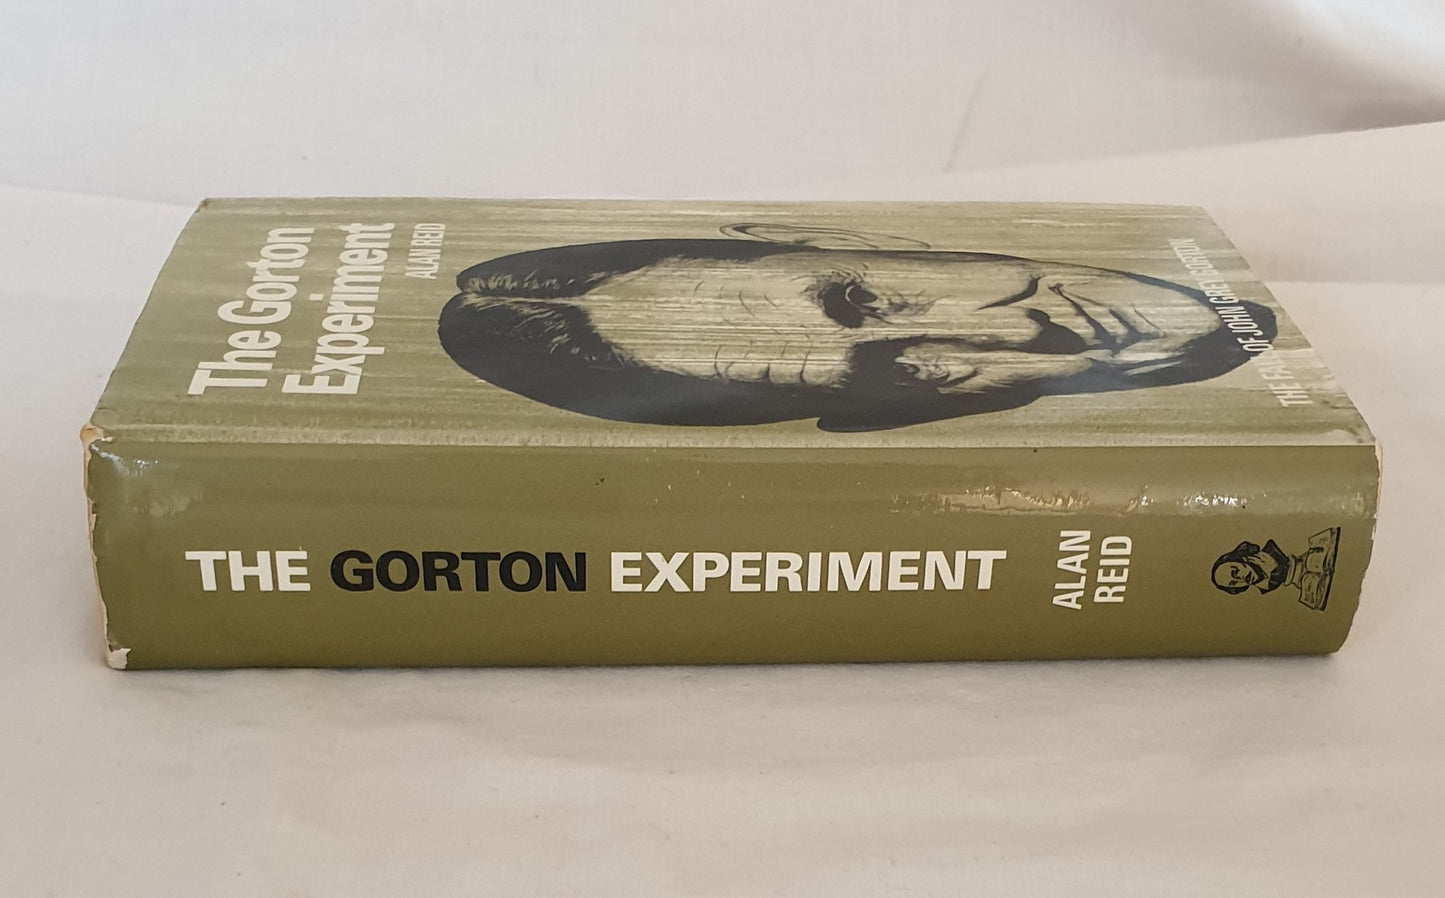 The Gorton Experiment by Alan Reid